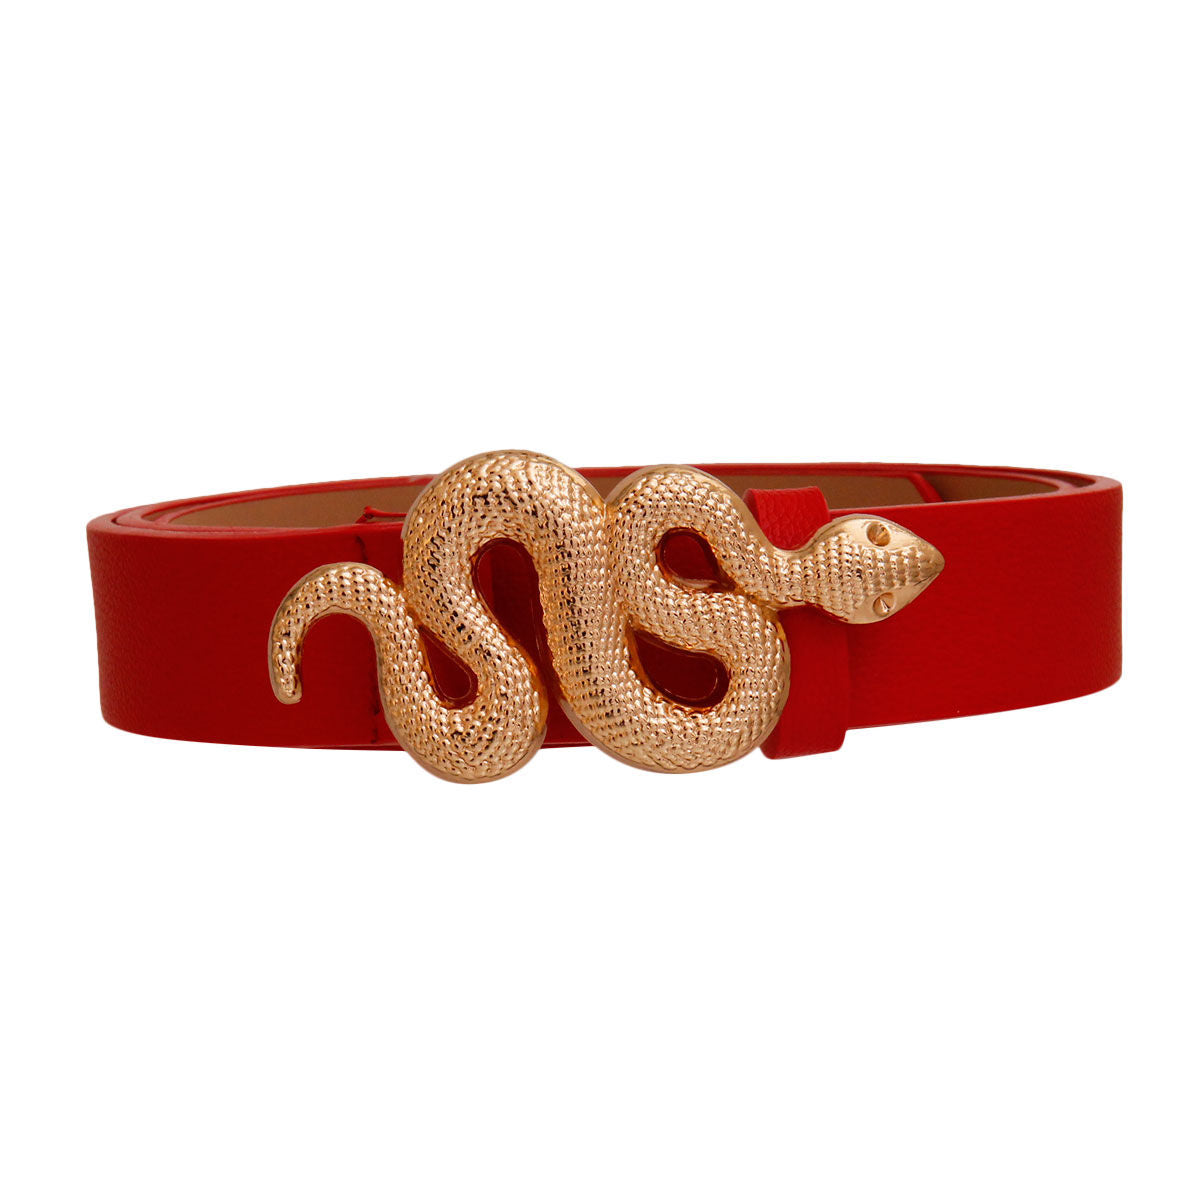 Serpentine Splendor Belt - Red and Gold